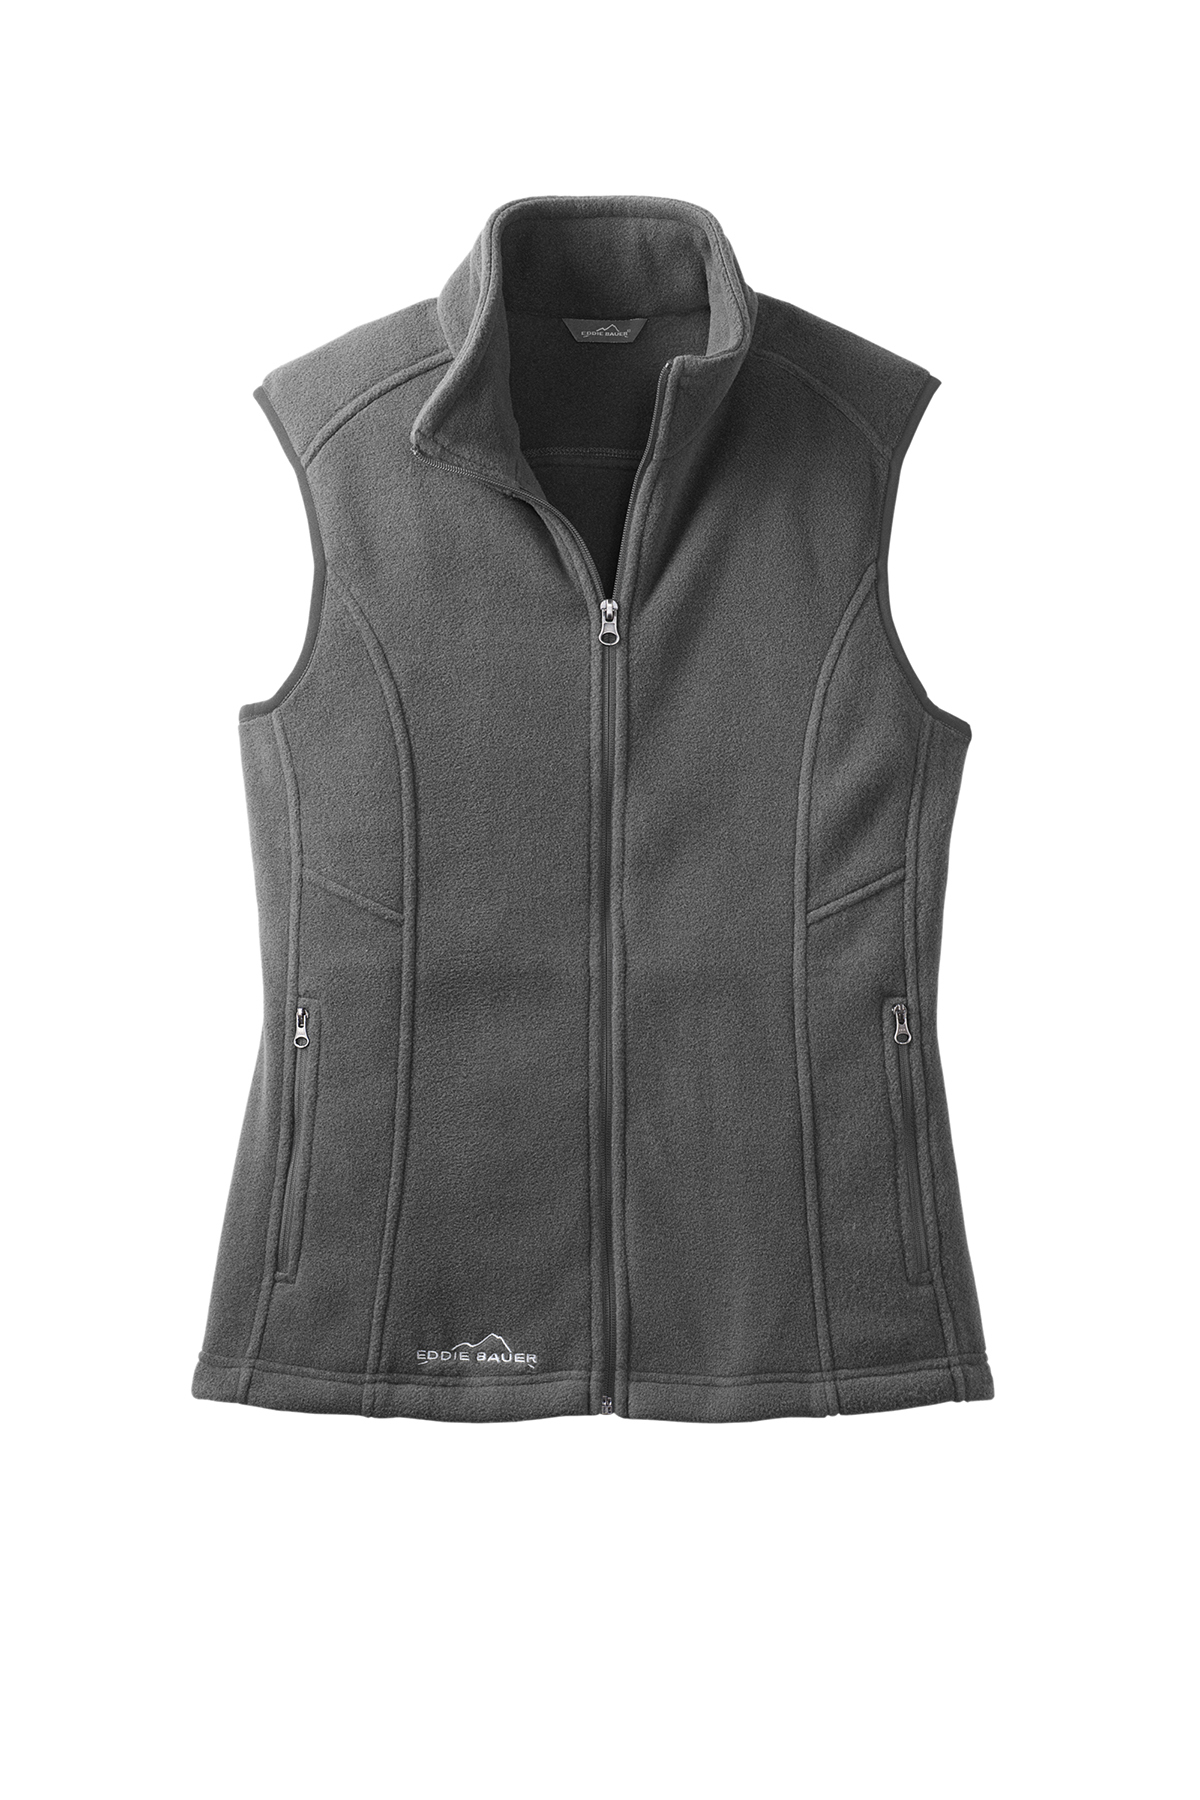 Eddie Bauer® - Ladies Fleece Vest (Grey) - SugarCreek Gear